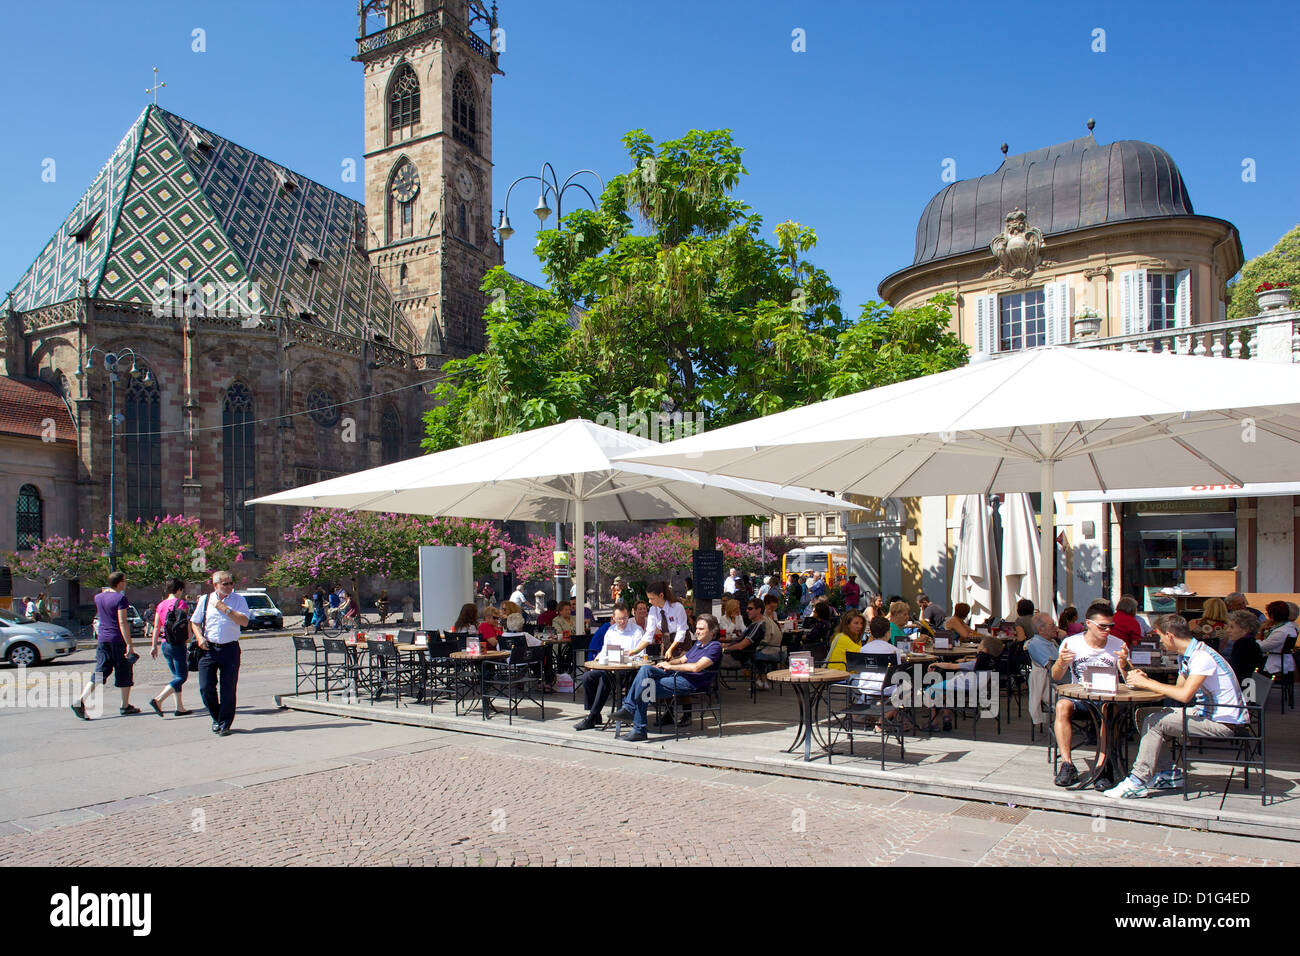 Cafe und Dom, Walther Platz, Bozen, Provinz Bozen, Trentino-Alto Adige, Italien, Europa Stockfoto